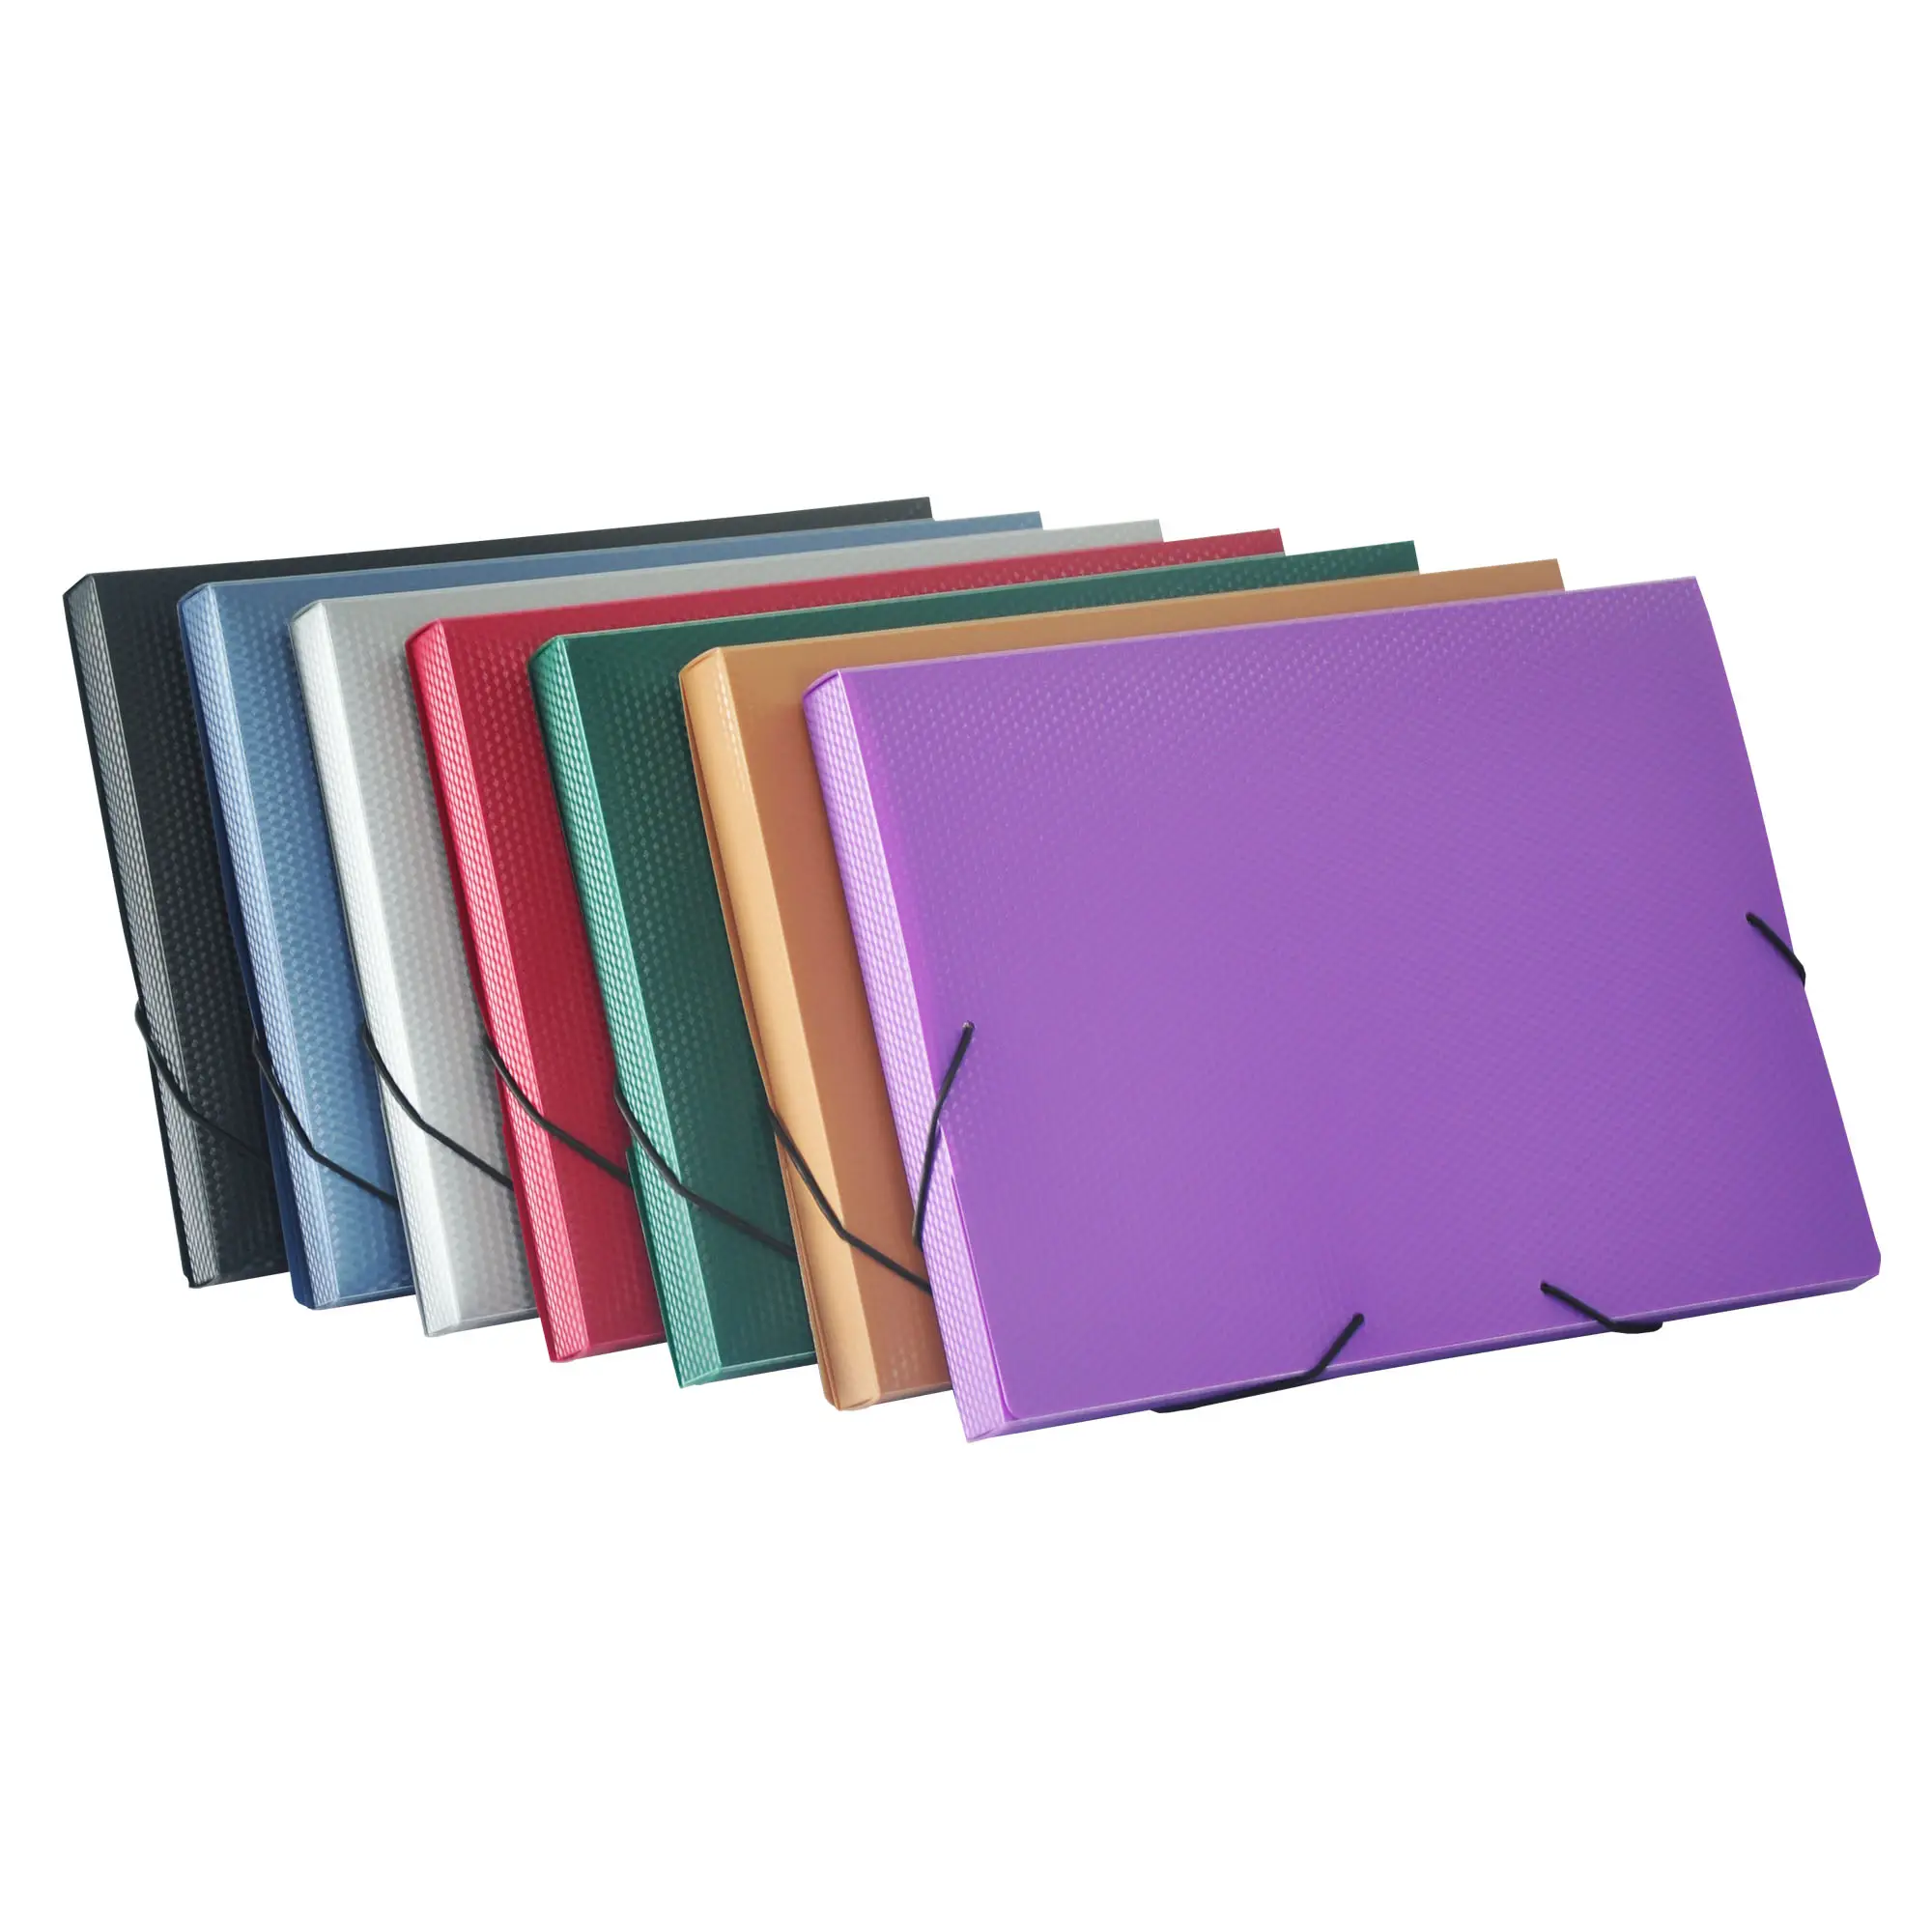 OEM pp file box plastic folder expanding wallet case Organizer document storage holder